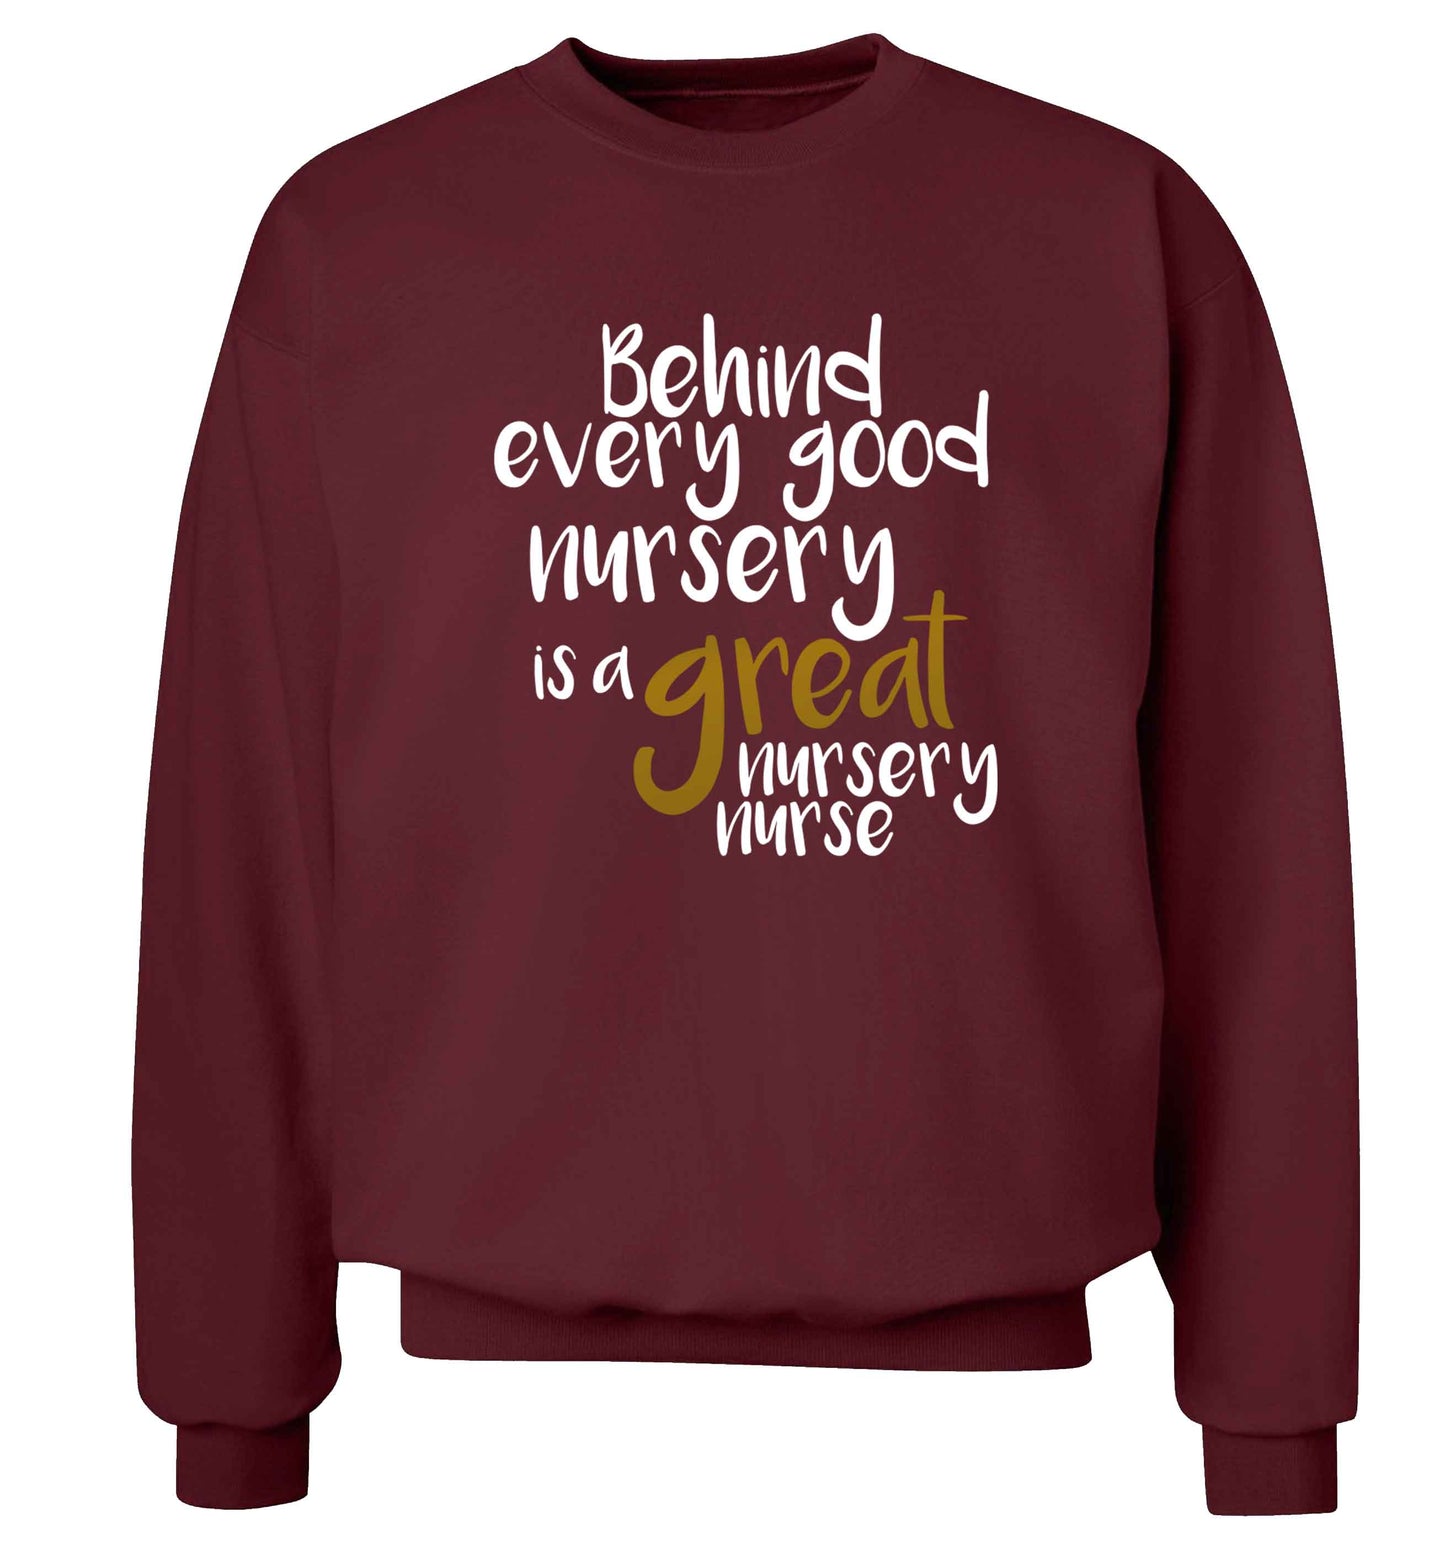 Behind every good nursery is a great nursery nurse Adult's unisex maroon Sweater 2XL